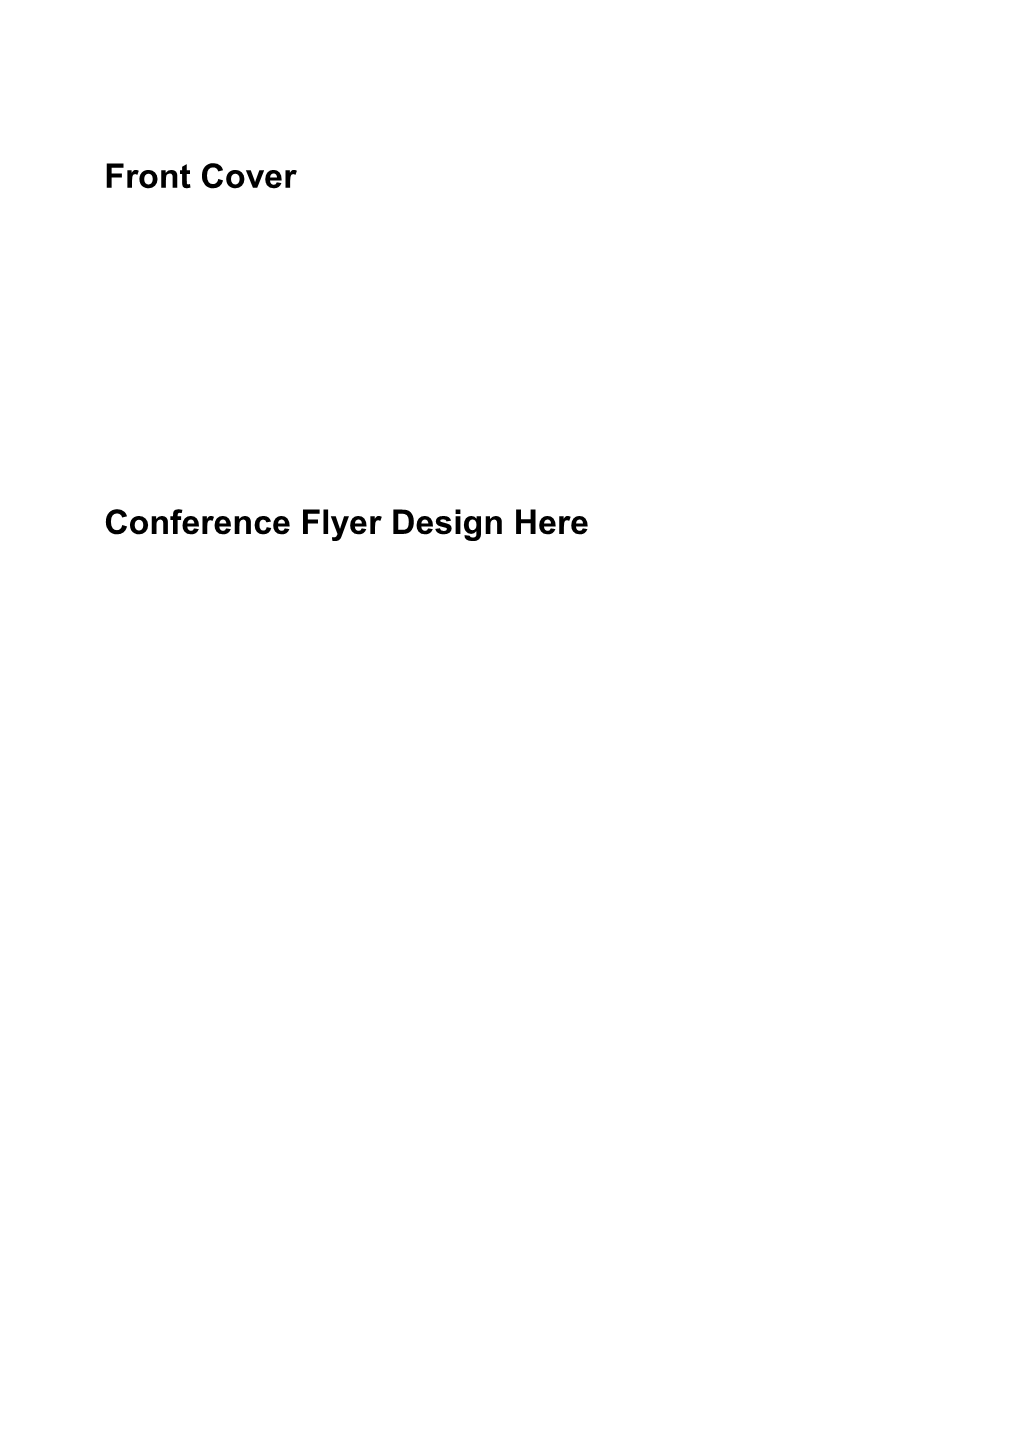 Conference Flyer Design Here